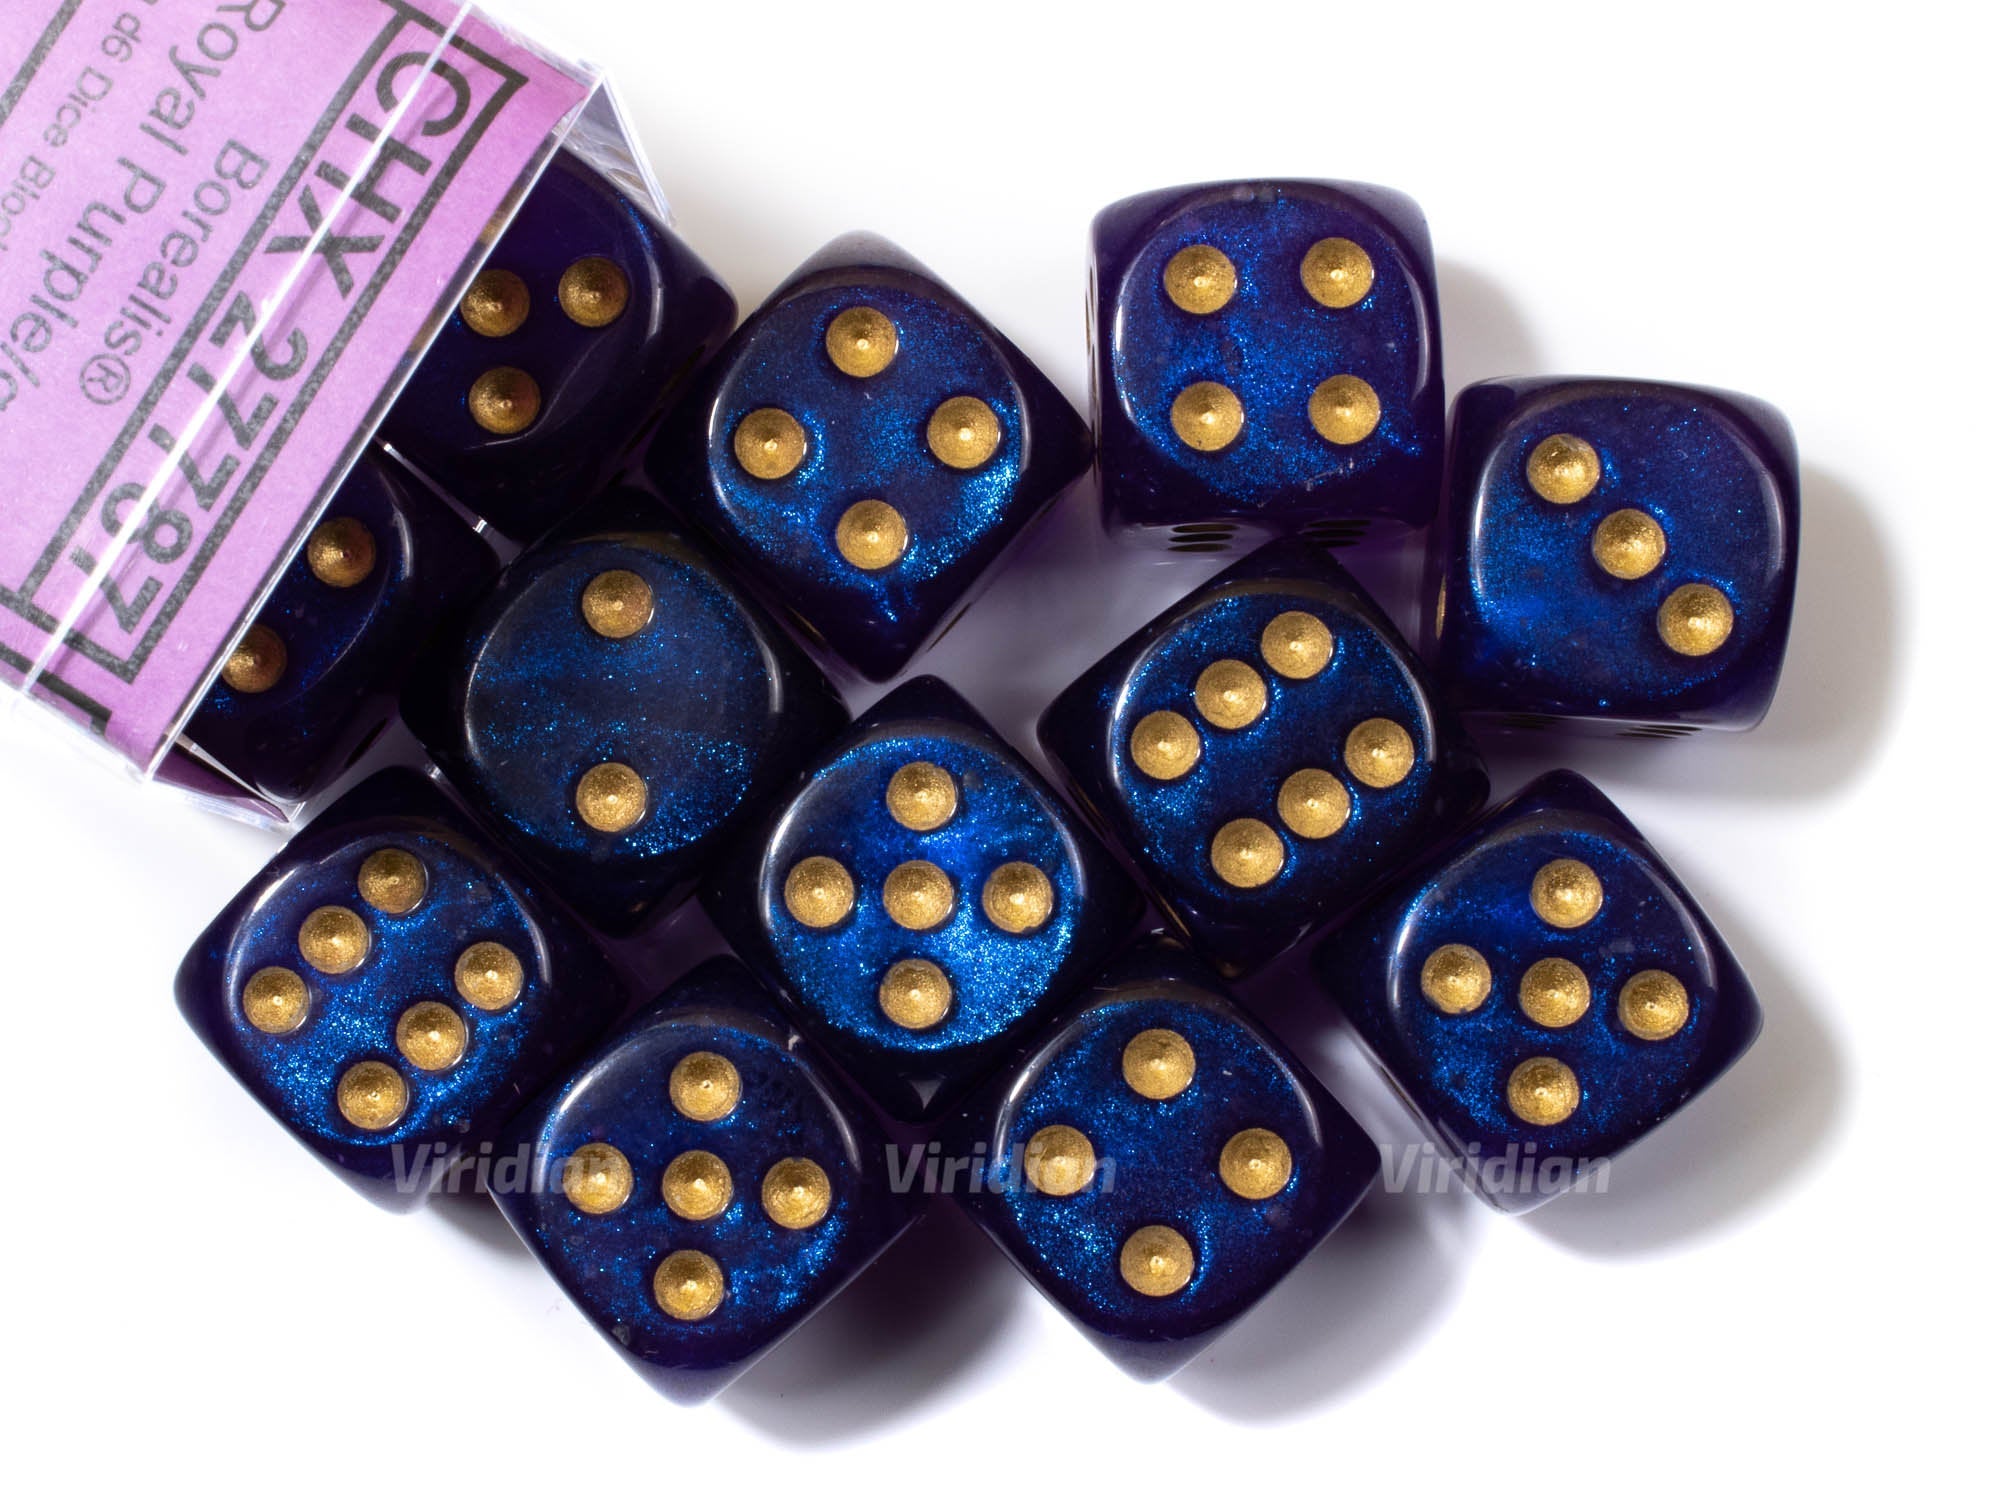 Borealis Royal Purple & Gold Luminary | D6 Block | Chessex Dice (12)